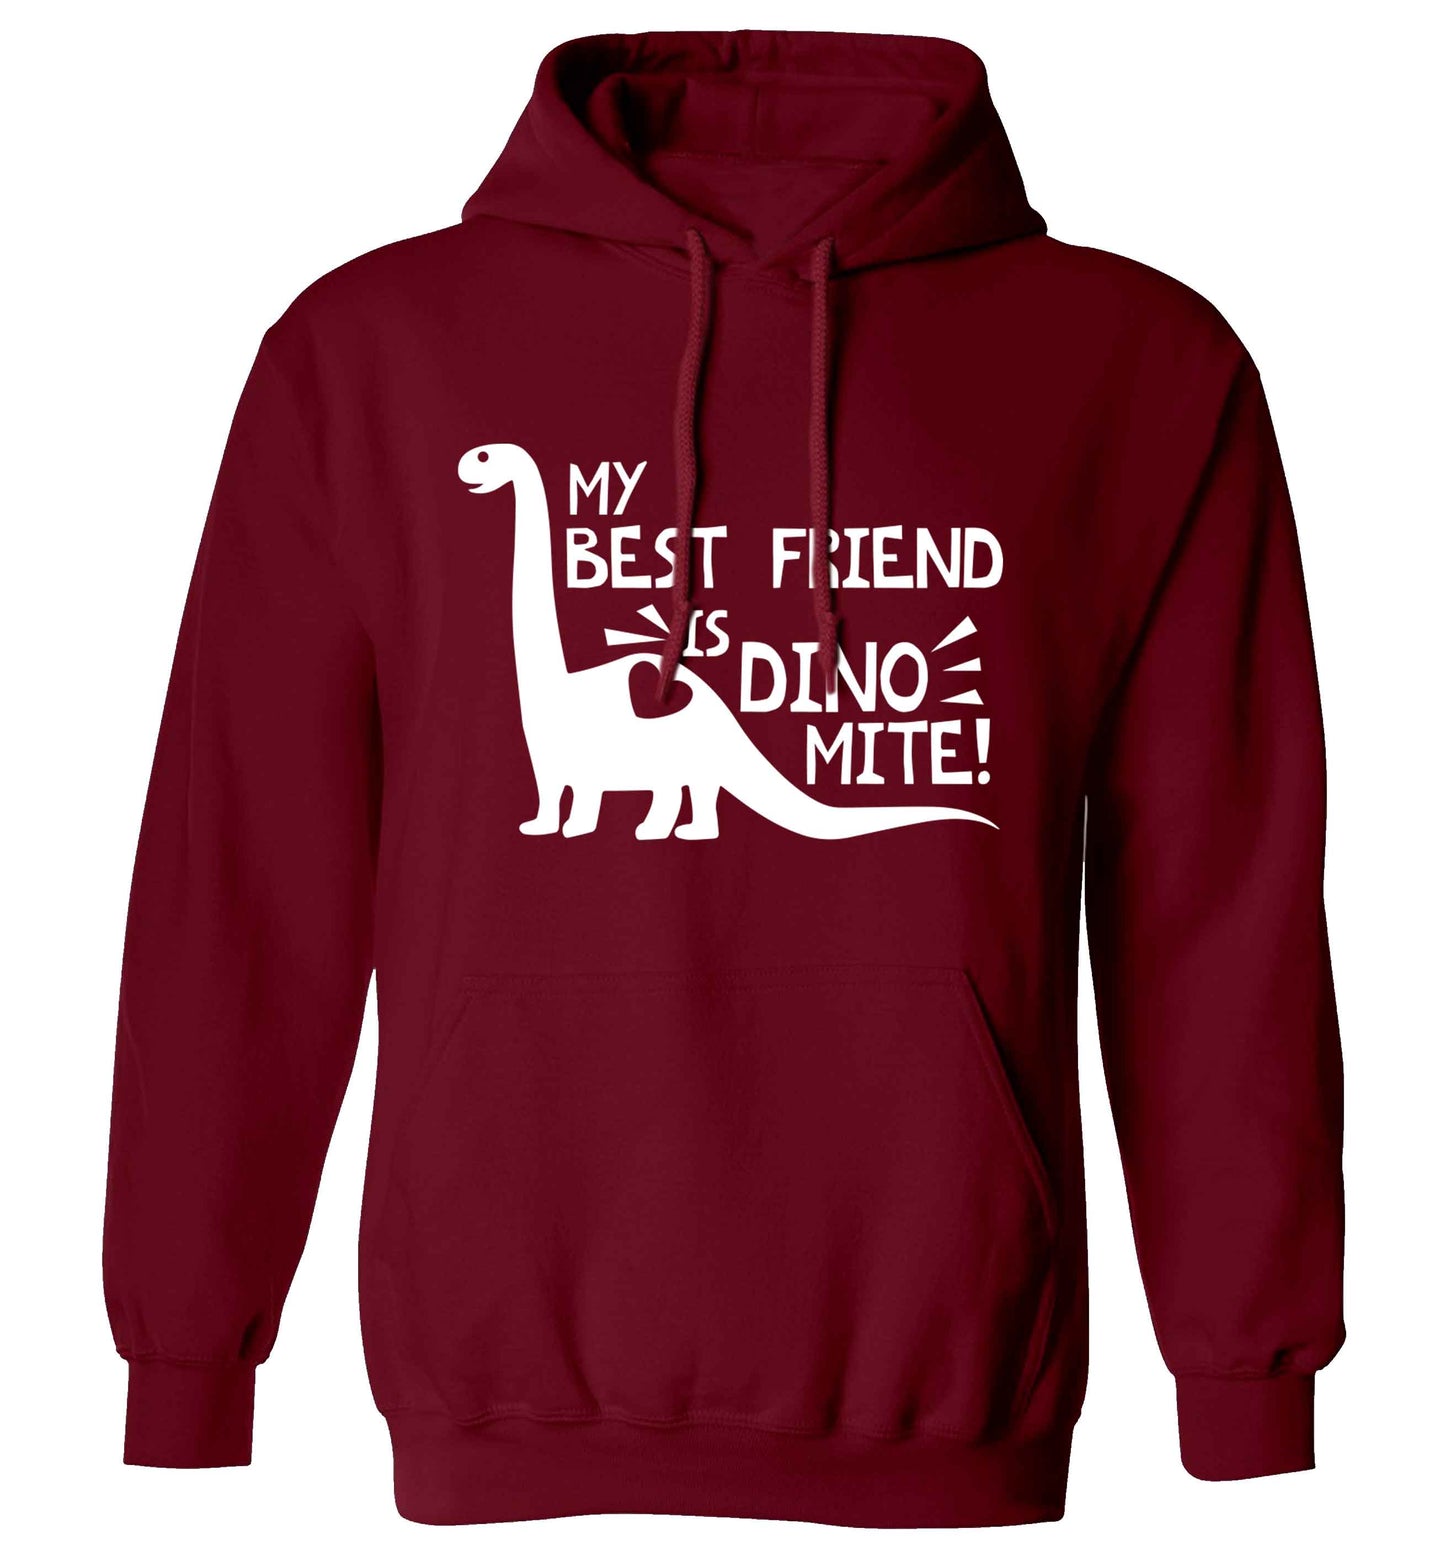 My best friend is dinomite! adults unisex maroon hoodie 2XL